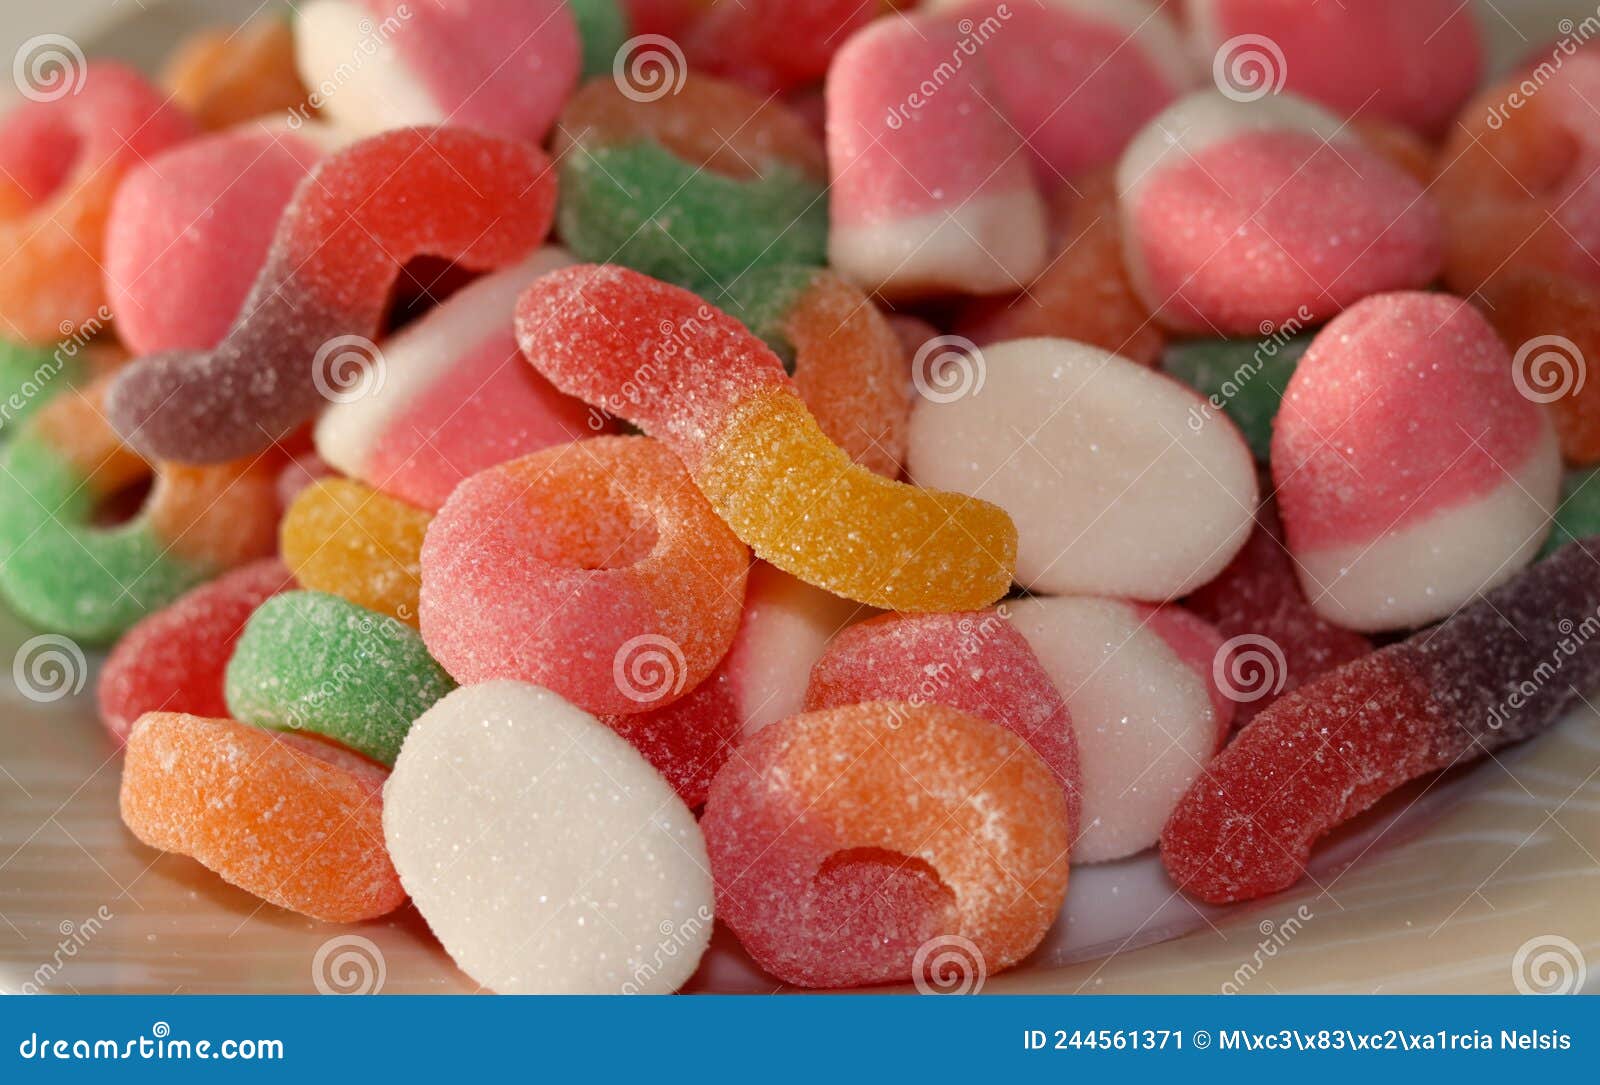 diferentes tipos de doces que dÃÂ£o uma bela cor ÃÂ  imagem.